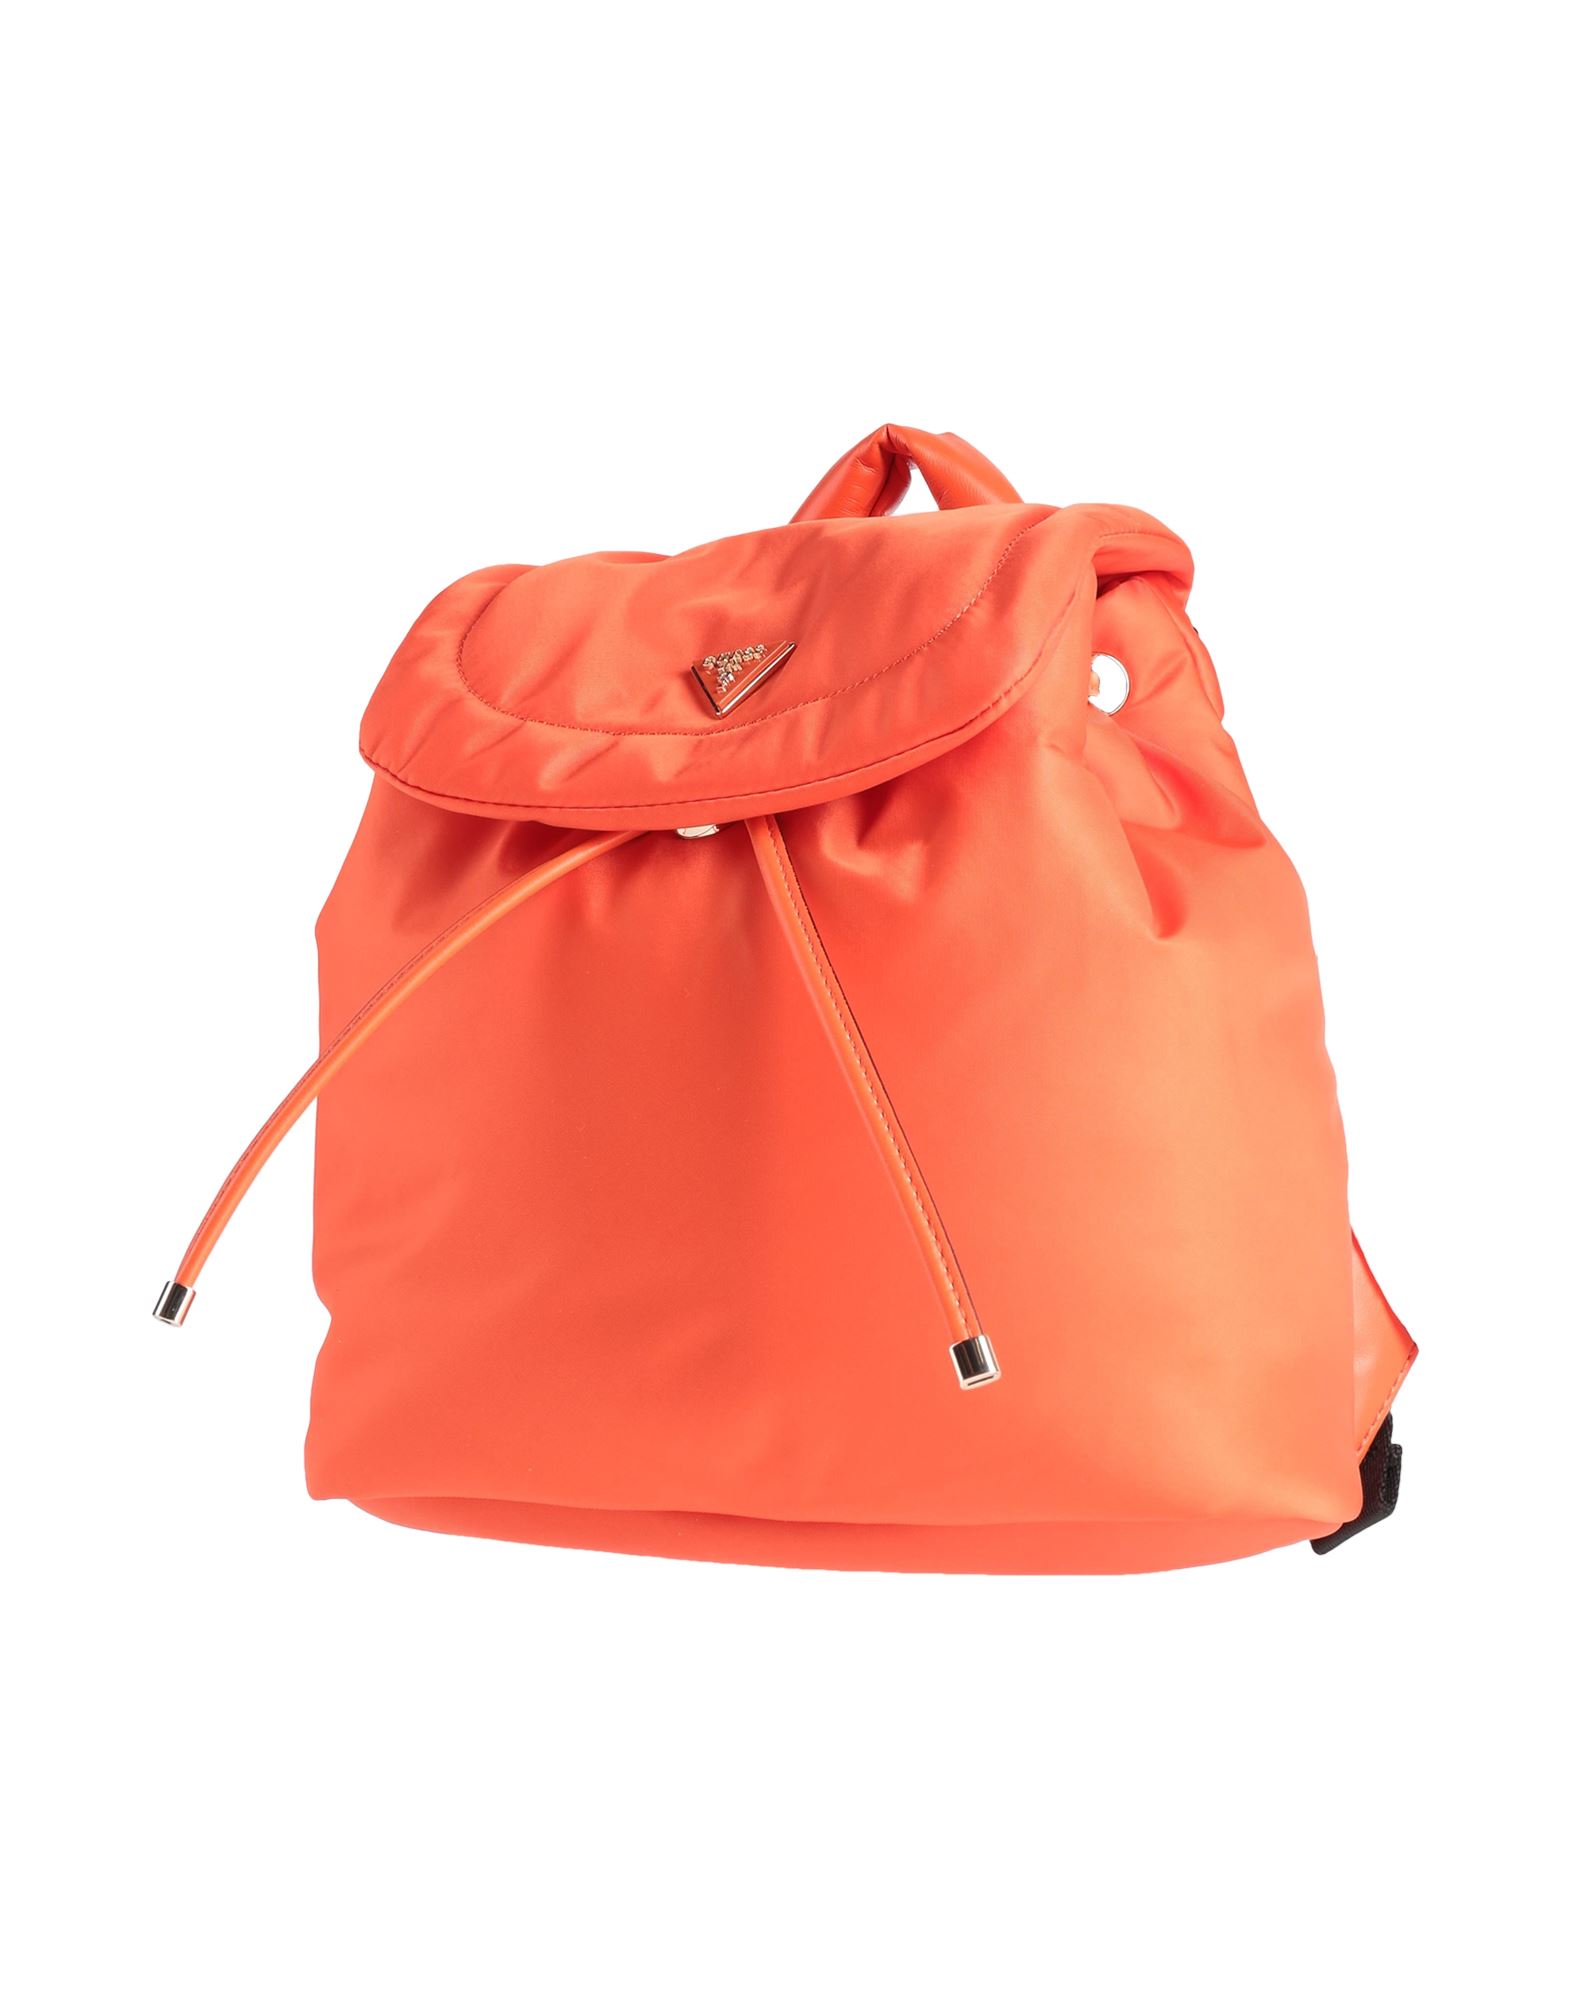 Guess Backpacks In Orange